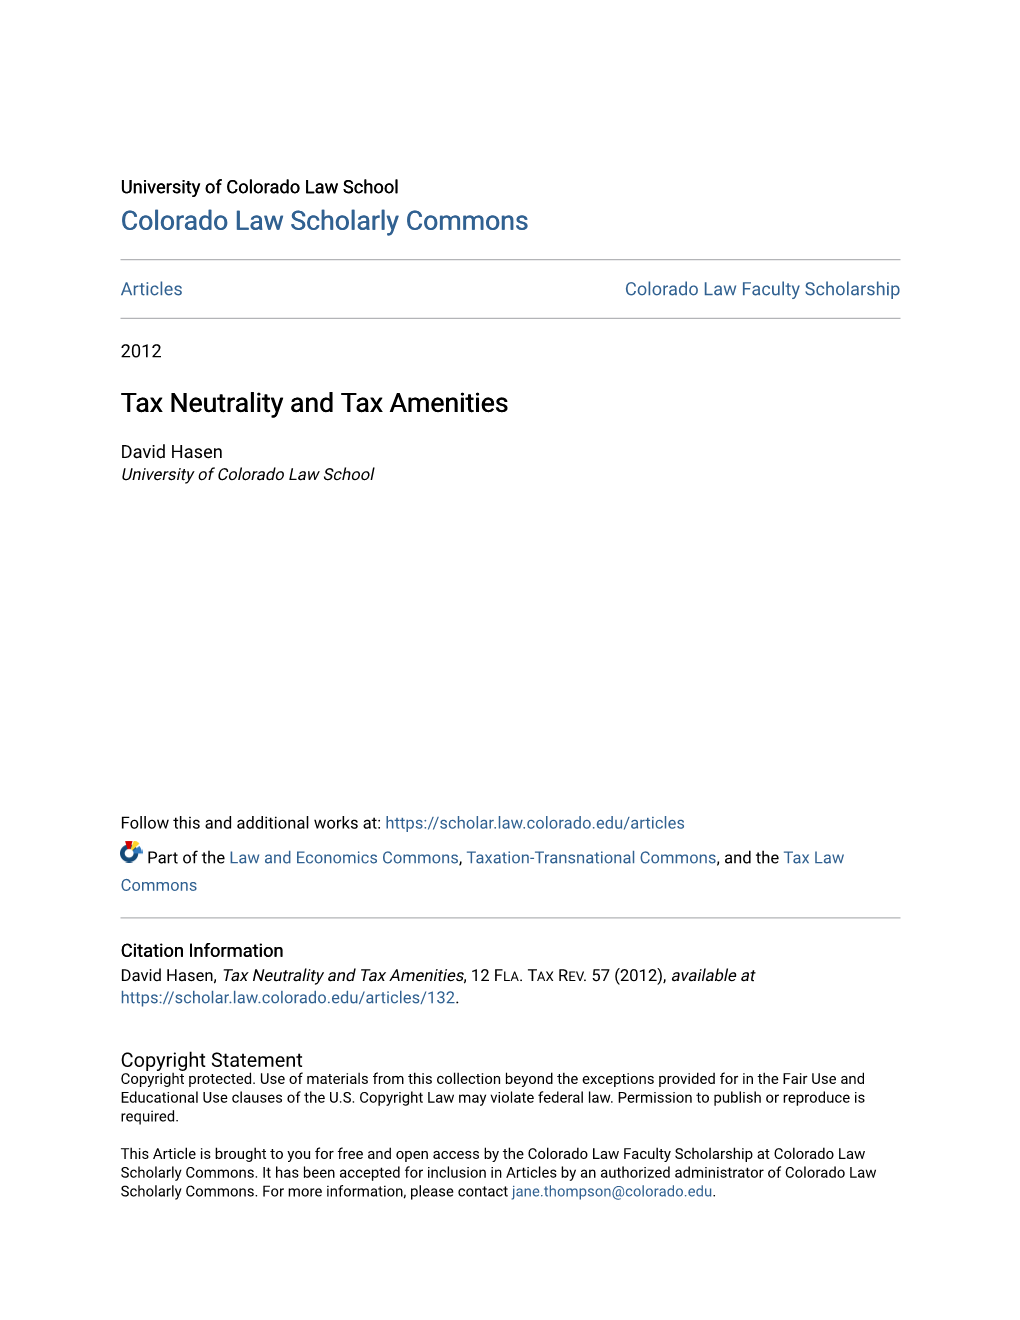 Tax Neutrality and Tax Amenities